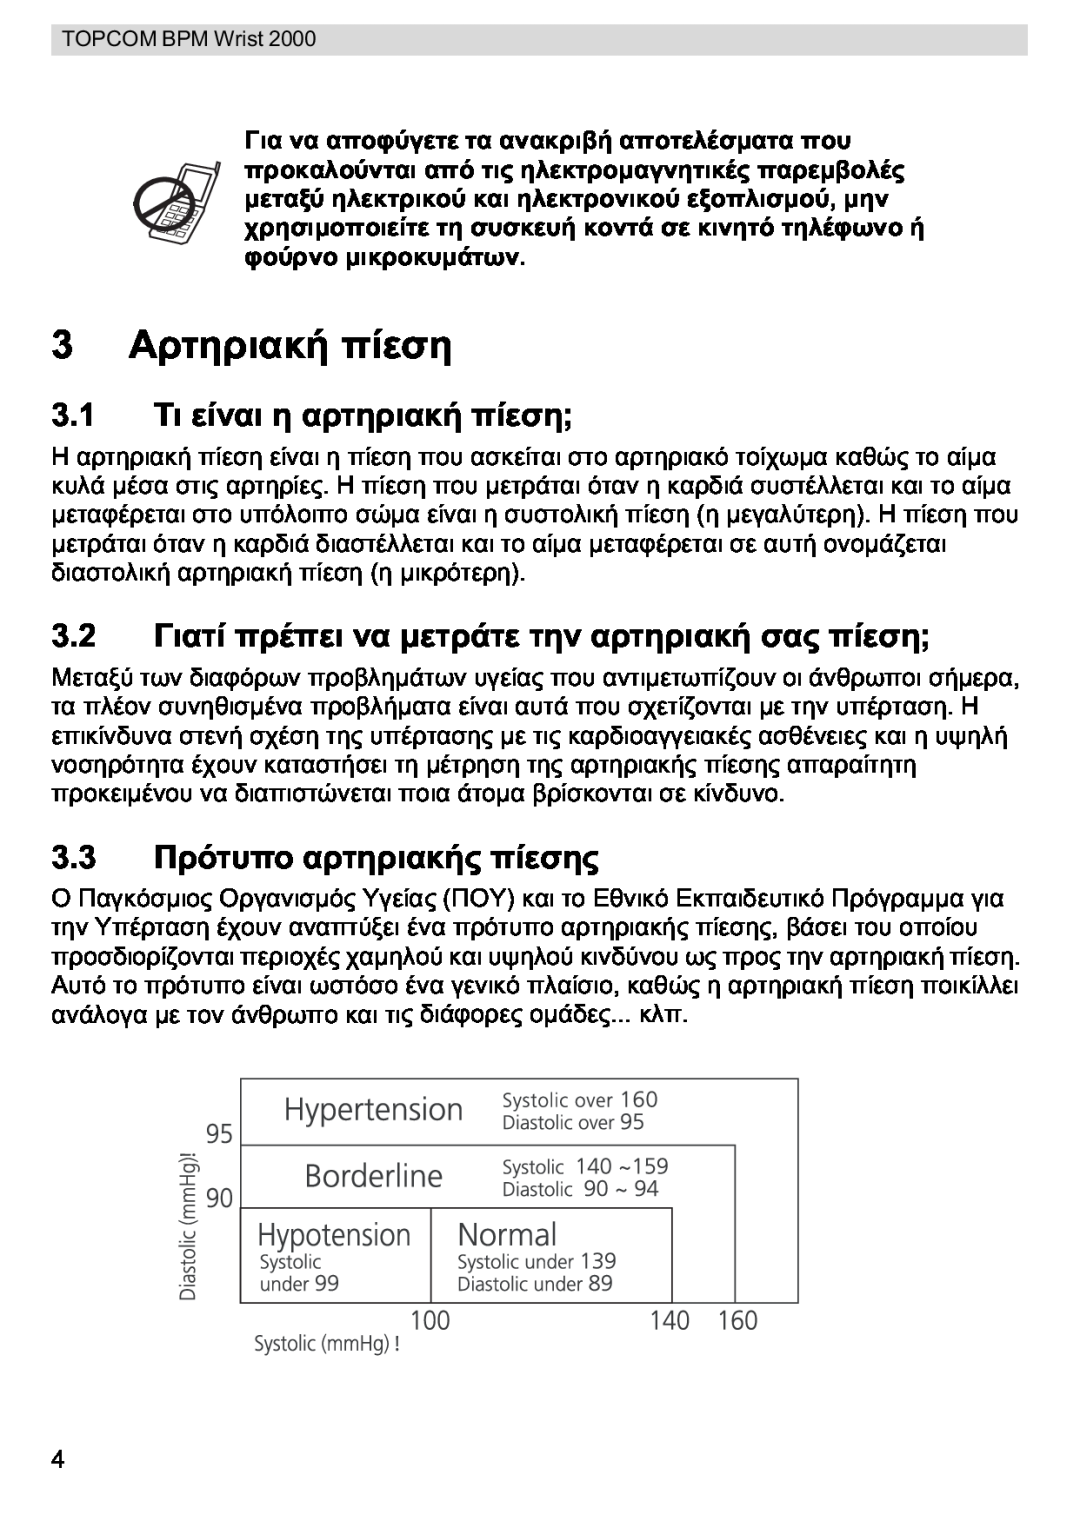 Topcom BPM WRIST 2000 manual 3.2 3.3, TOPCOM BPM Wrist 